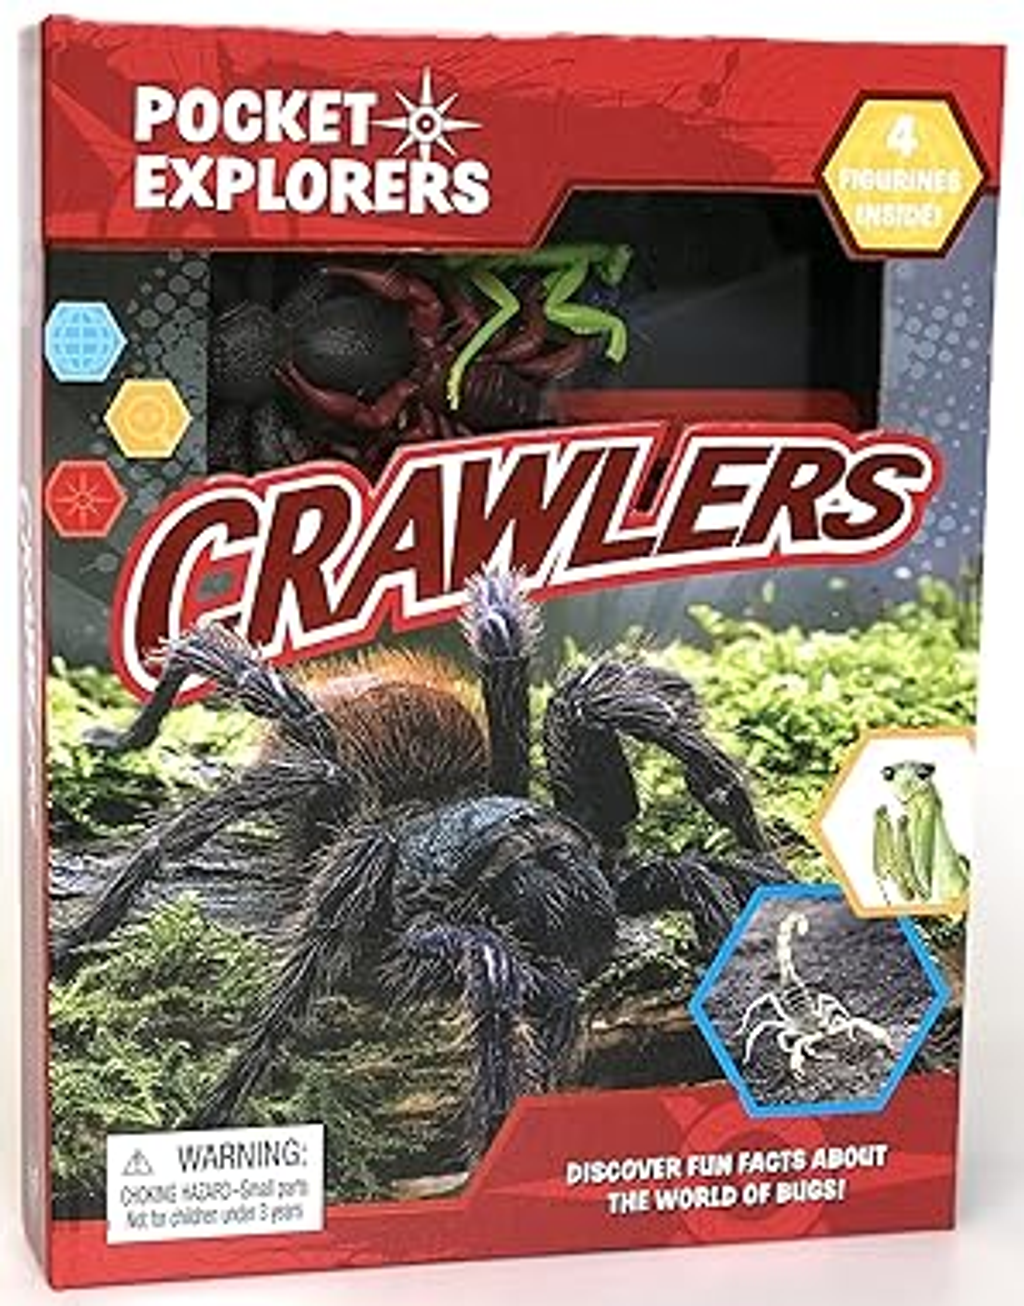 pocket explorer-crawlers 1a